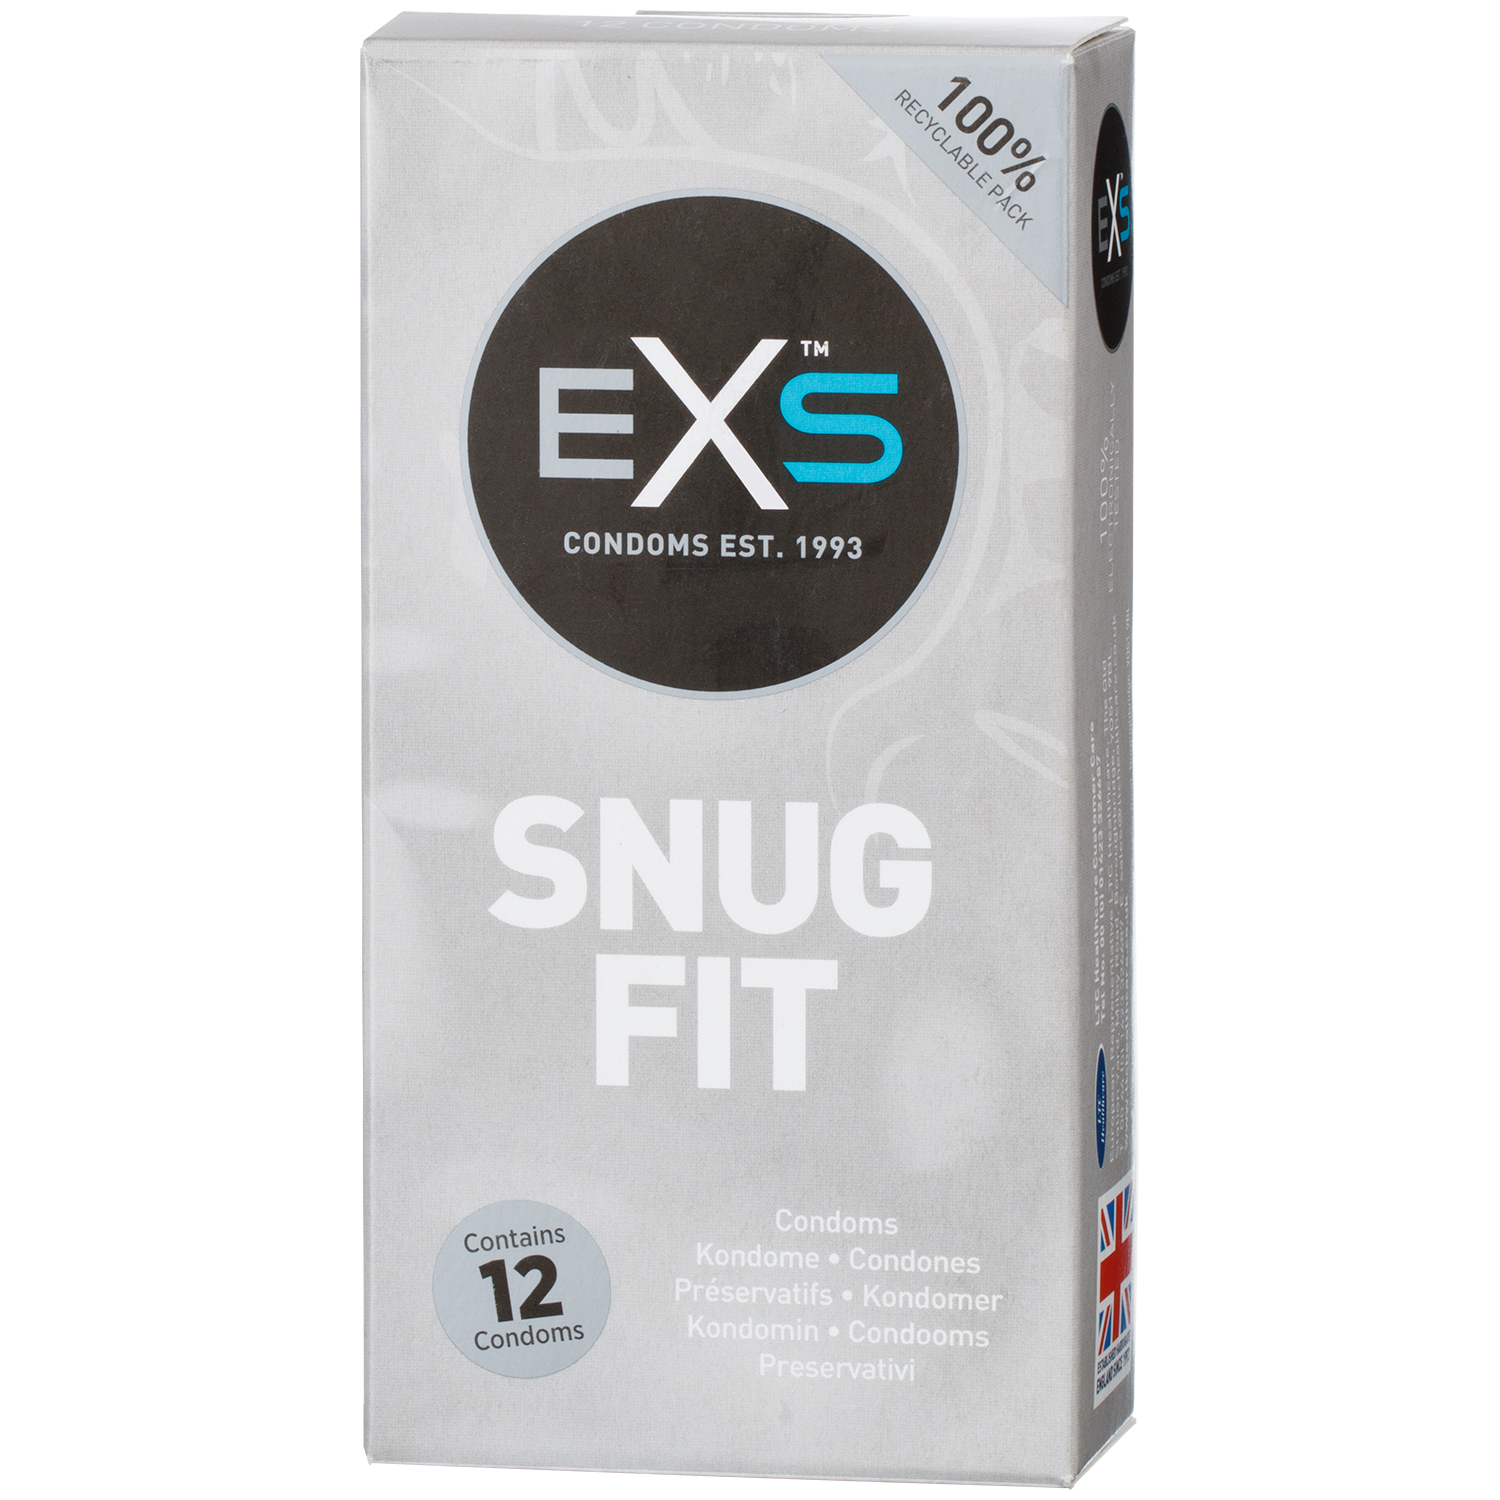 EXS Snug Fit Kondomer 12 stk     - Klar thumbnail